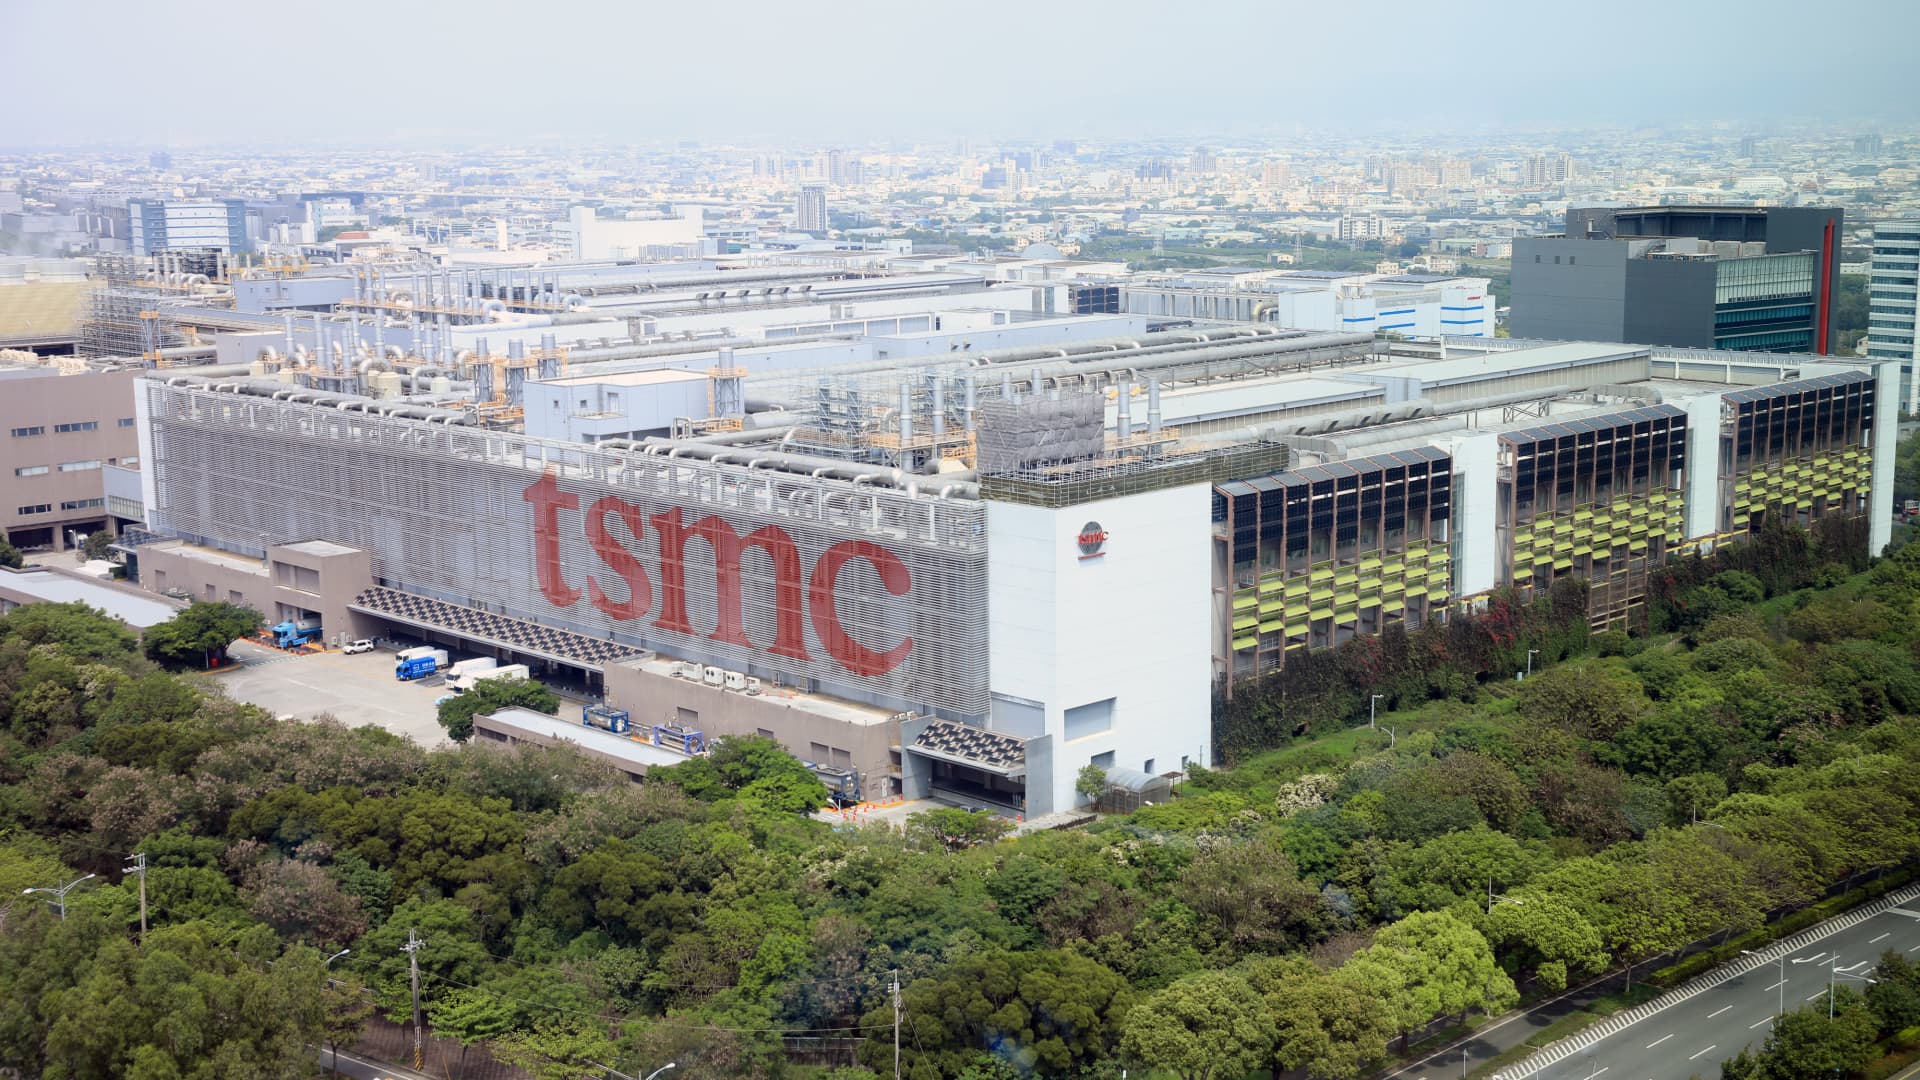 Taiwan Semiconductor Manufacturing Company (TSMC)